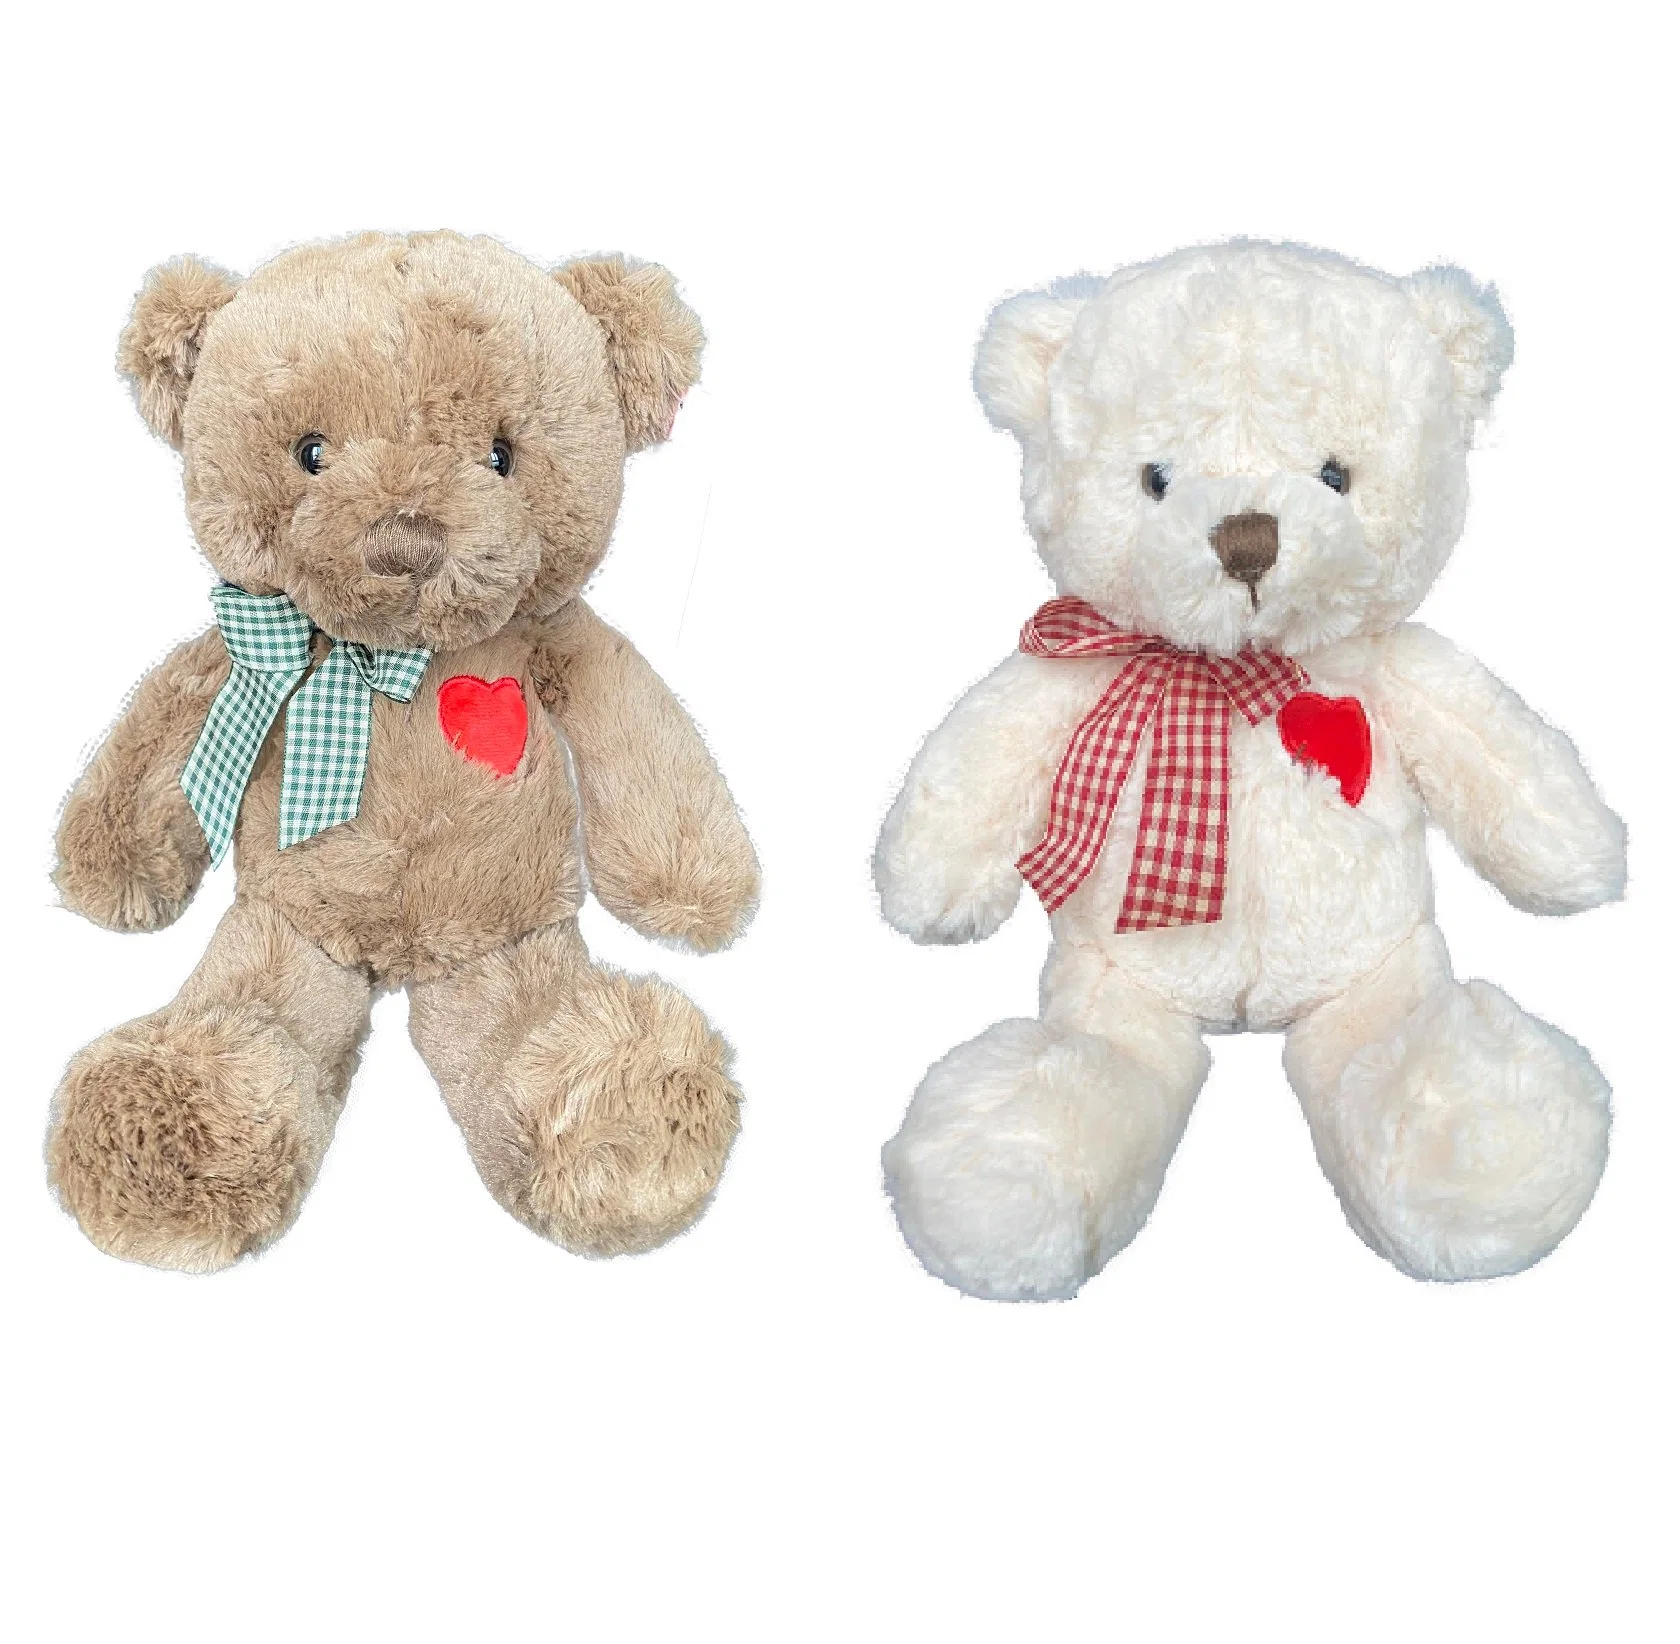 Bonitinha Plush Teddye ostentar recheadas de brinquedo ursos de peluche